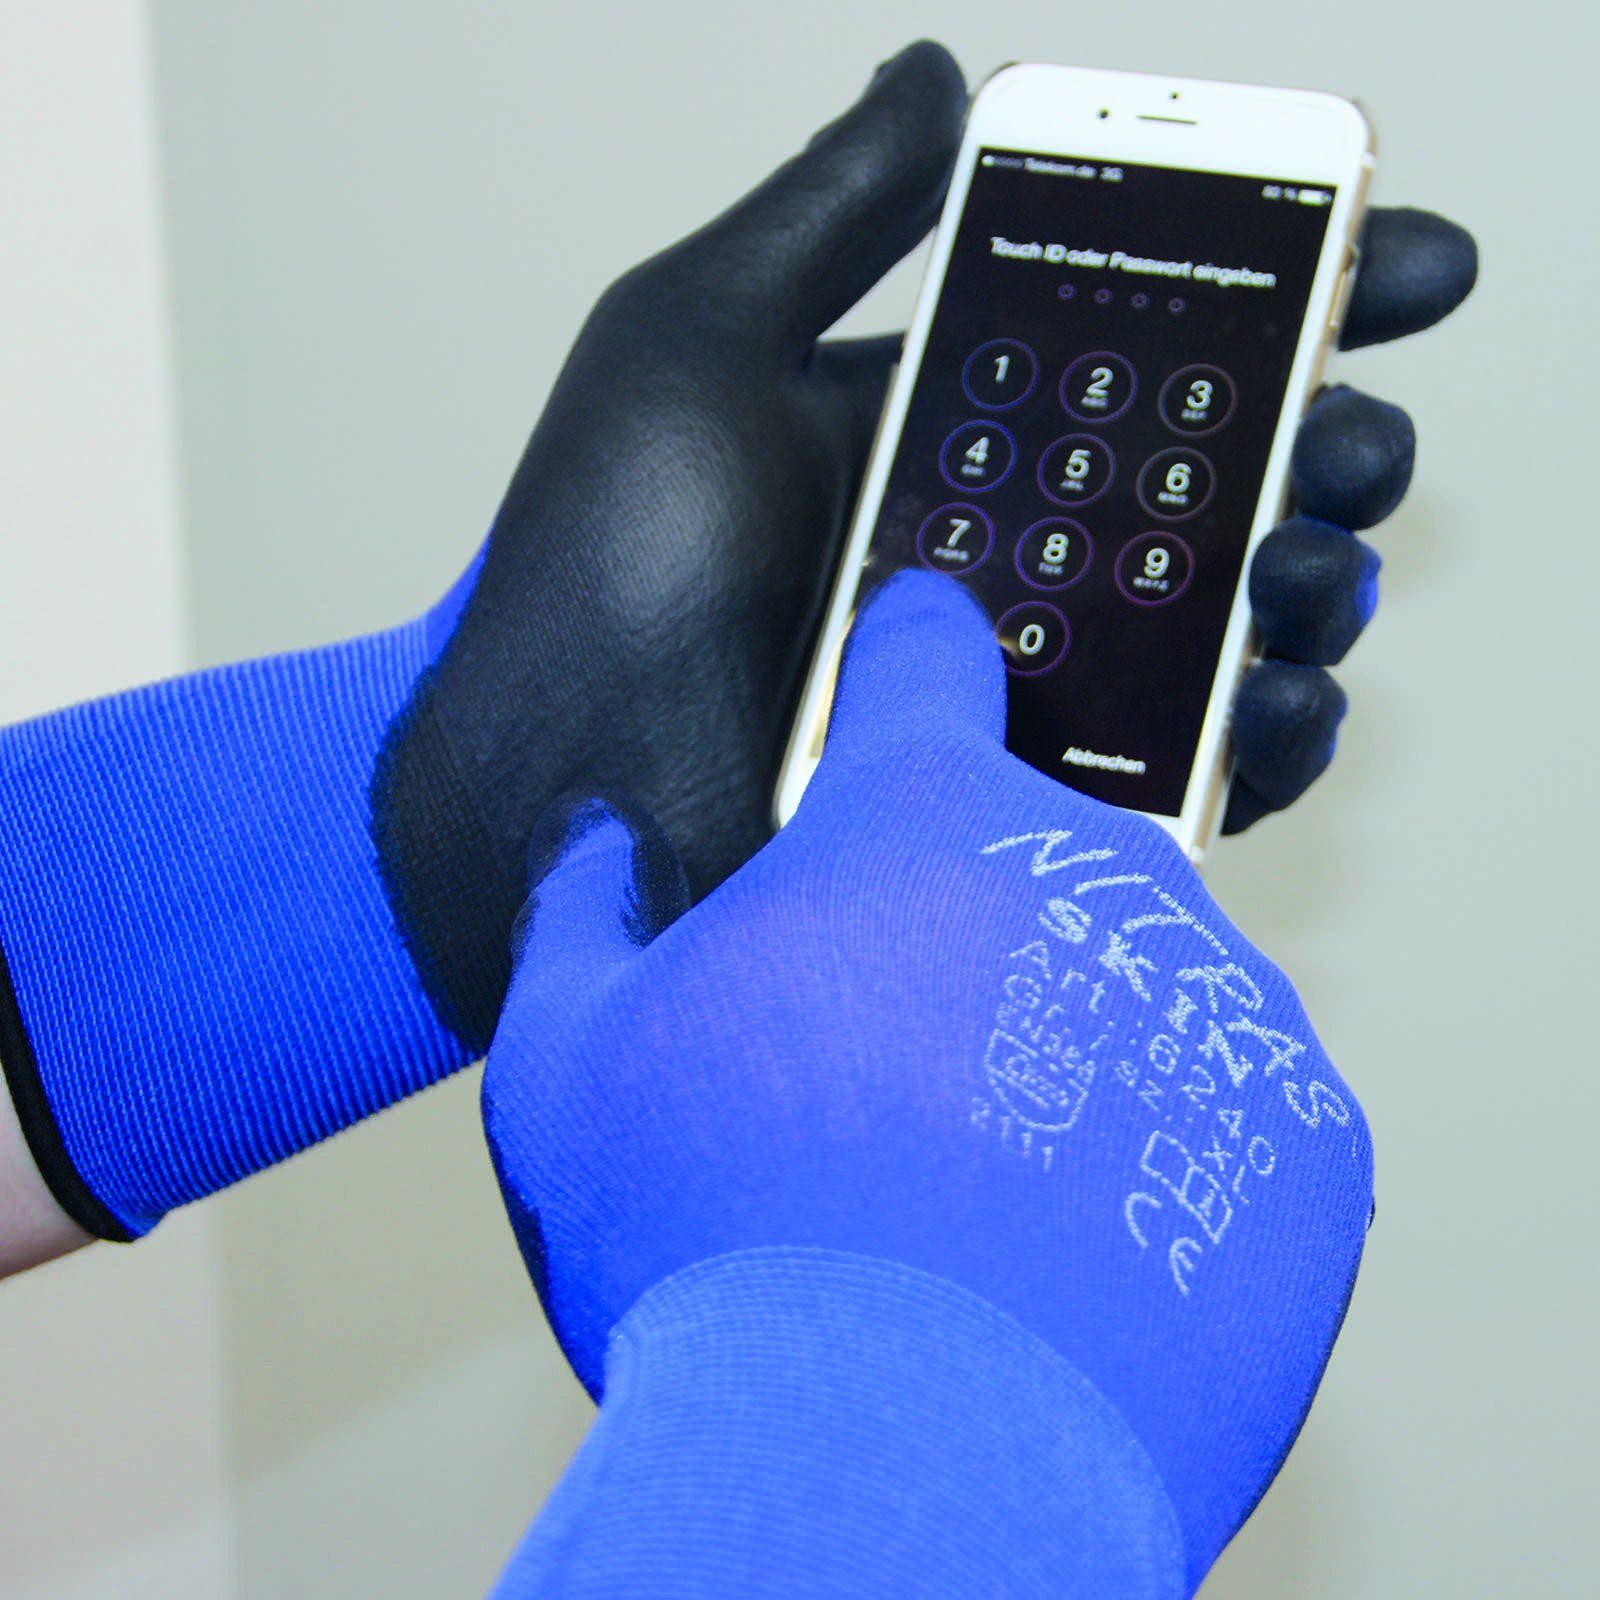 Paar Nitril-Handschuhe Skin Nylon-Strickhandschuhe, NITRAS (Spar-Set) - schwarz/blau 120 Nitras PU-Beschichtung 6240